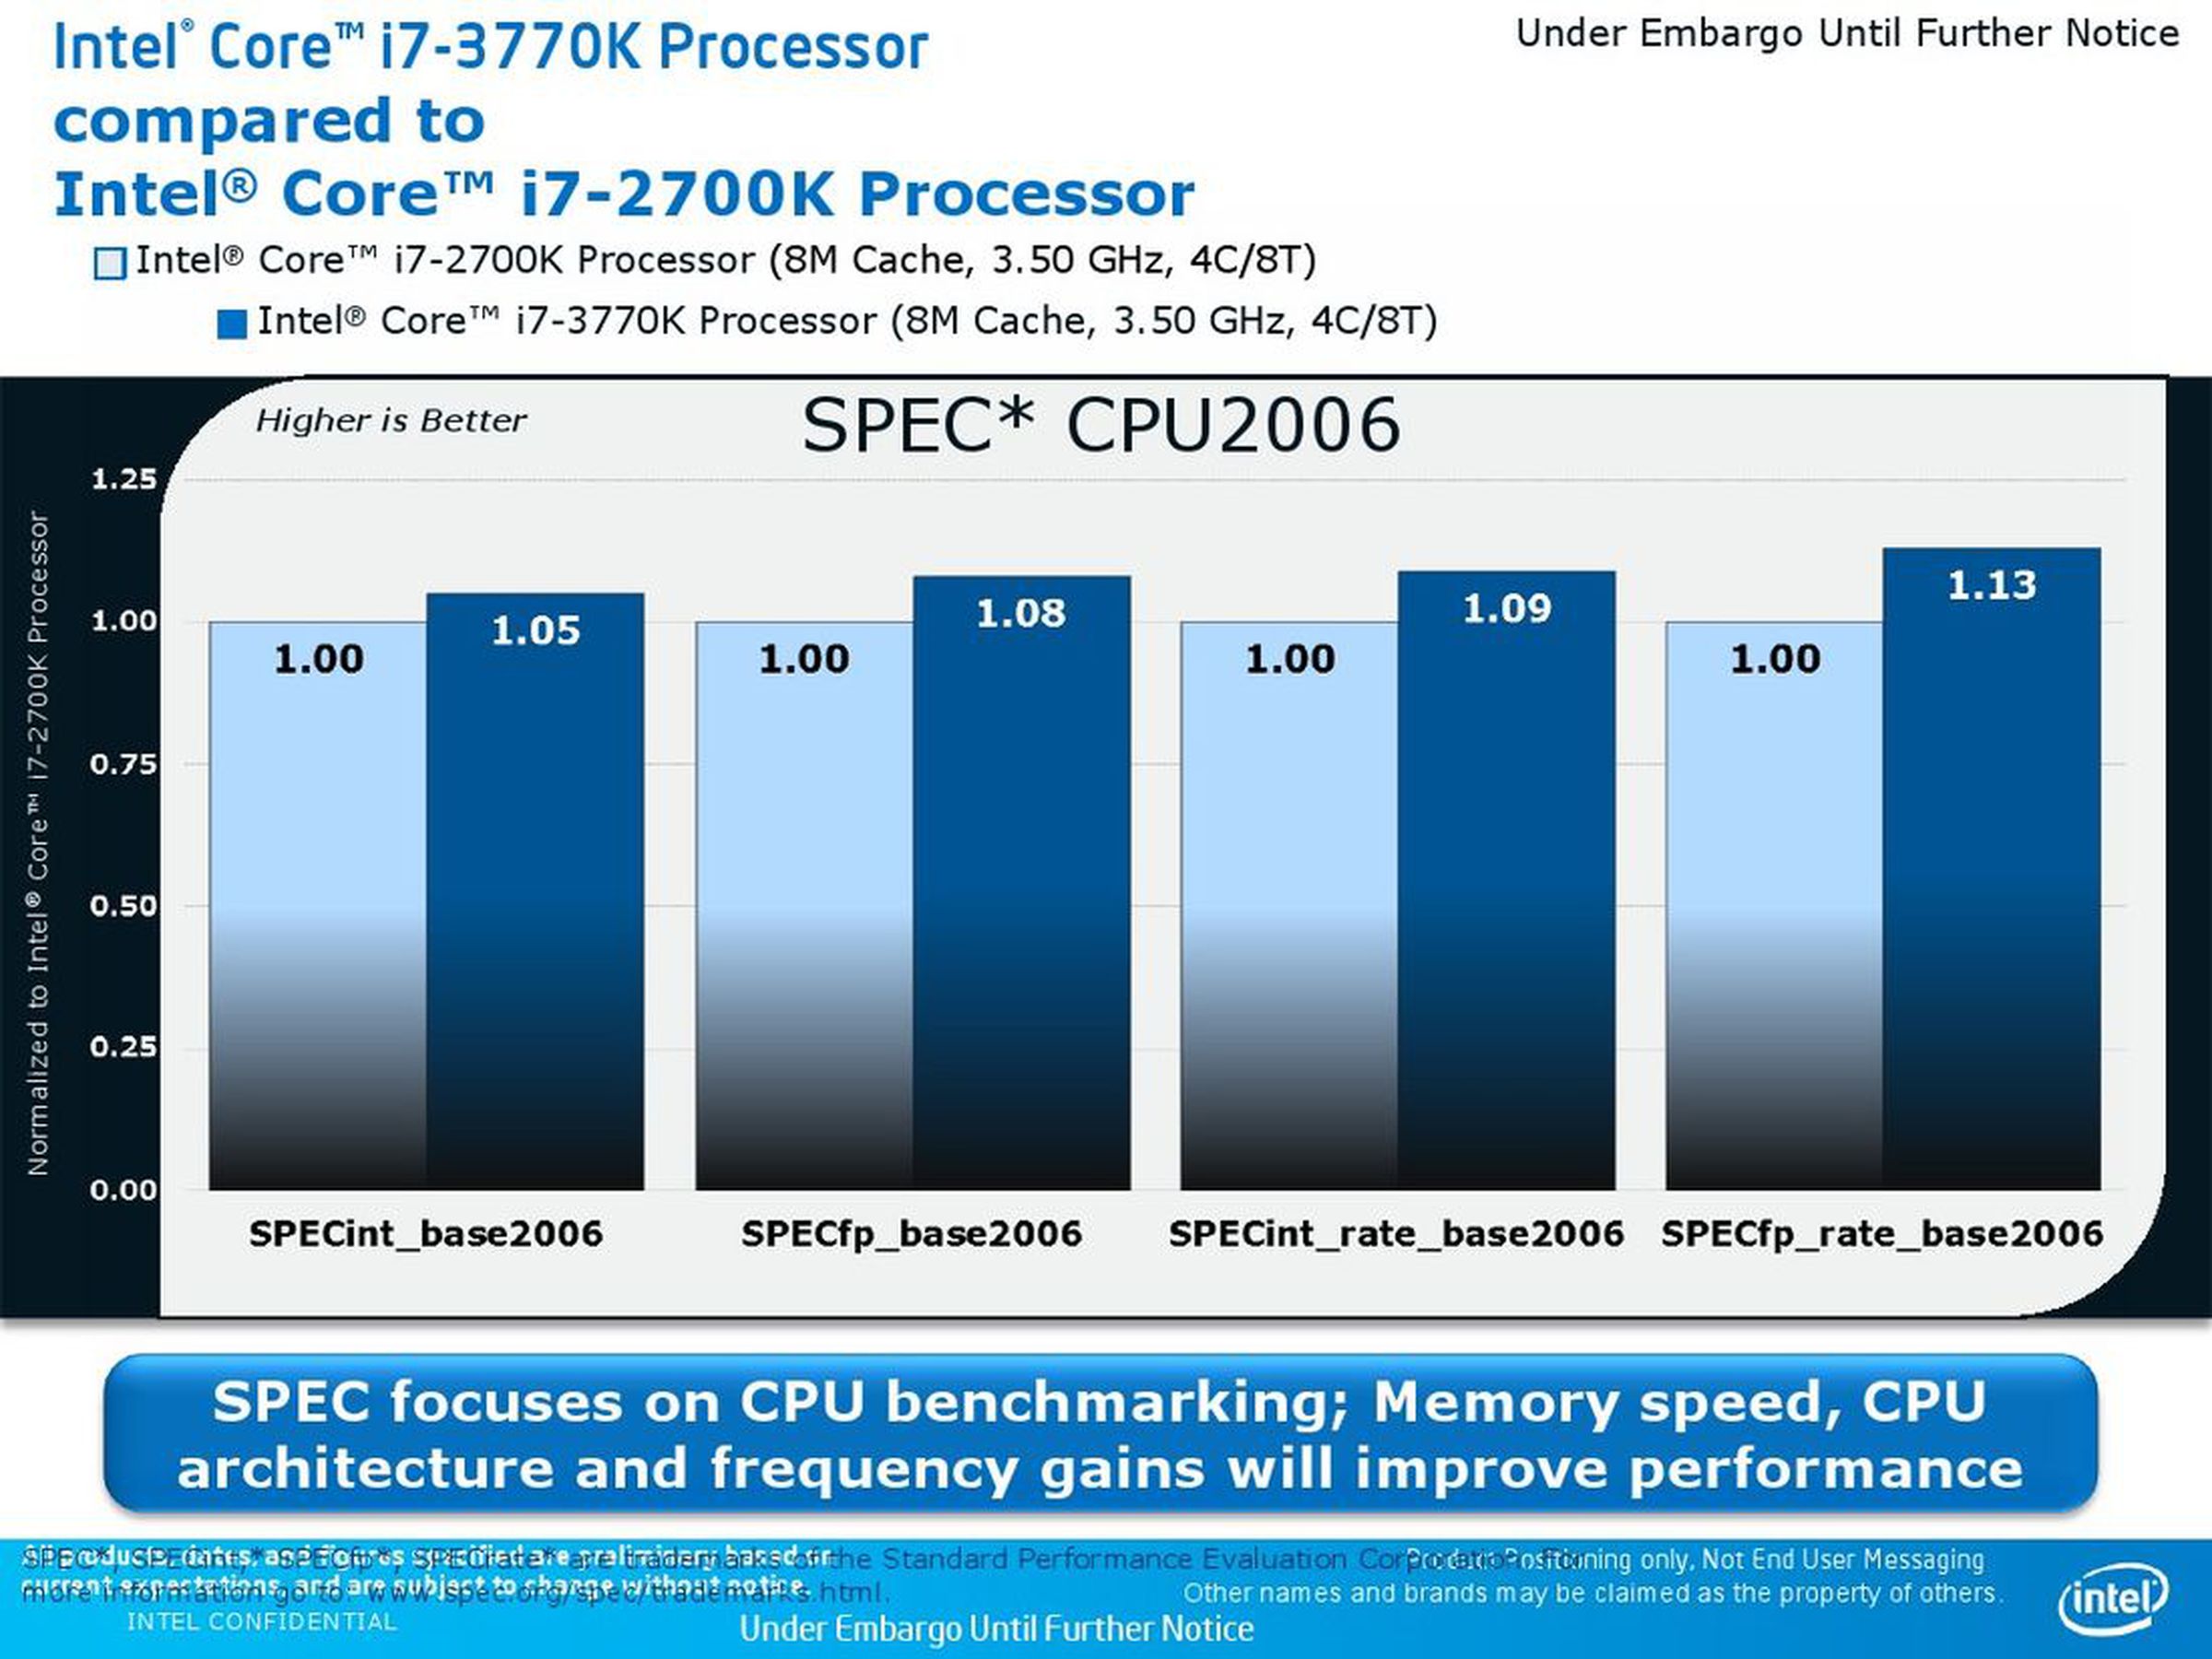 Intel 3rd generation Core processor (Ivy Bridge) slidedeck